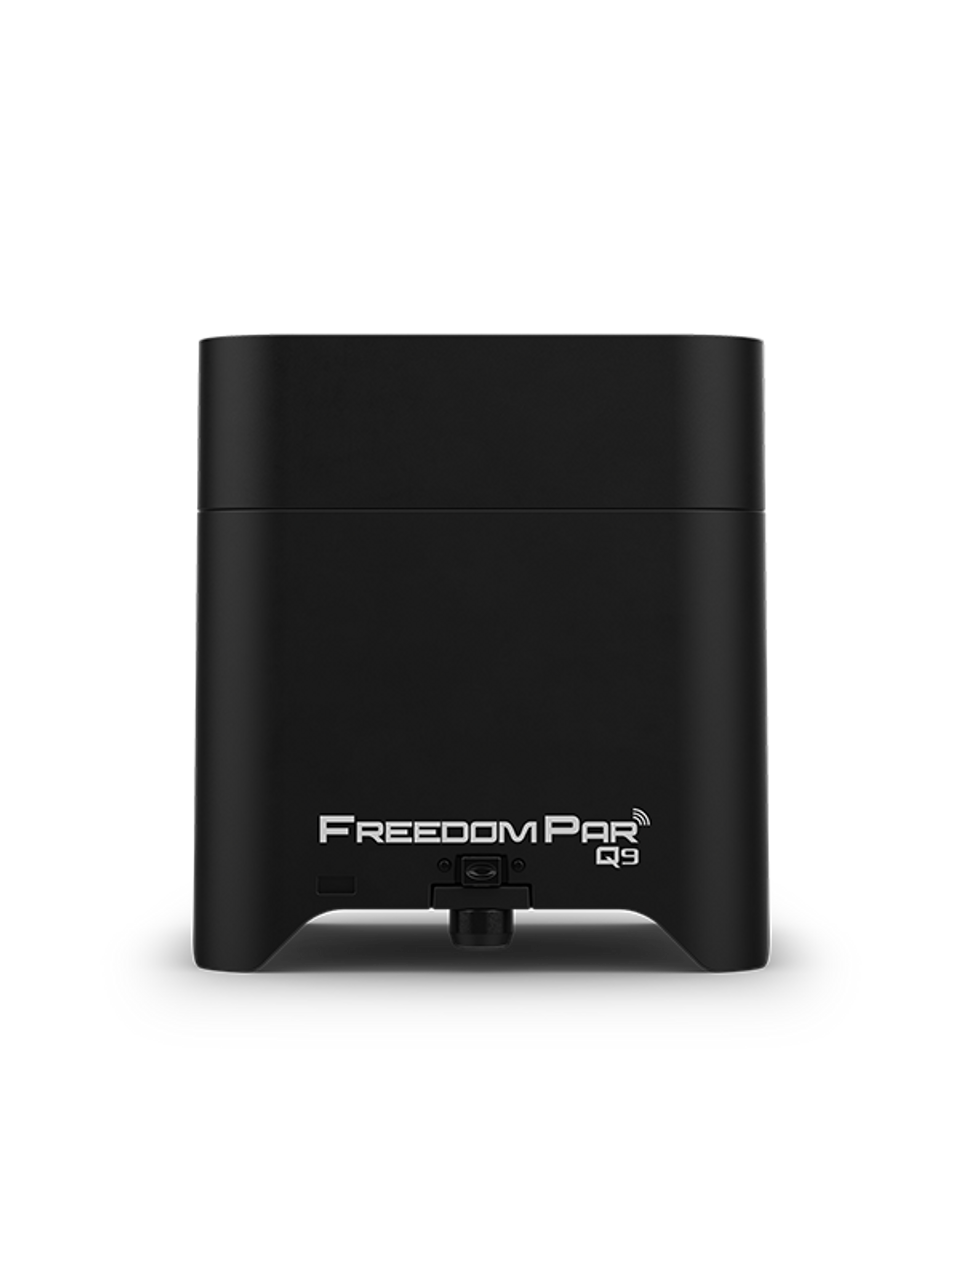 Chauvet DJ FREEDOMPARQ9X4 complete lighting kit that includes four Freedom Par Q9